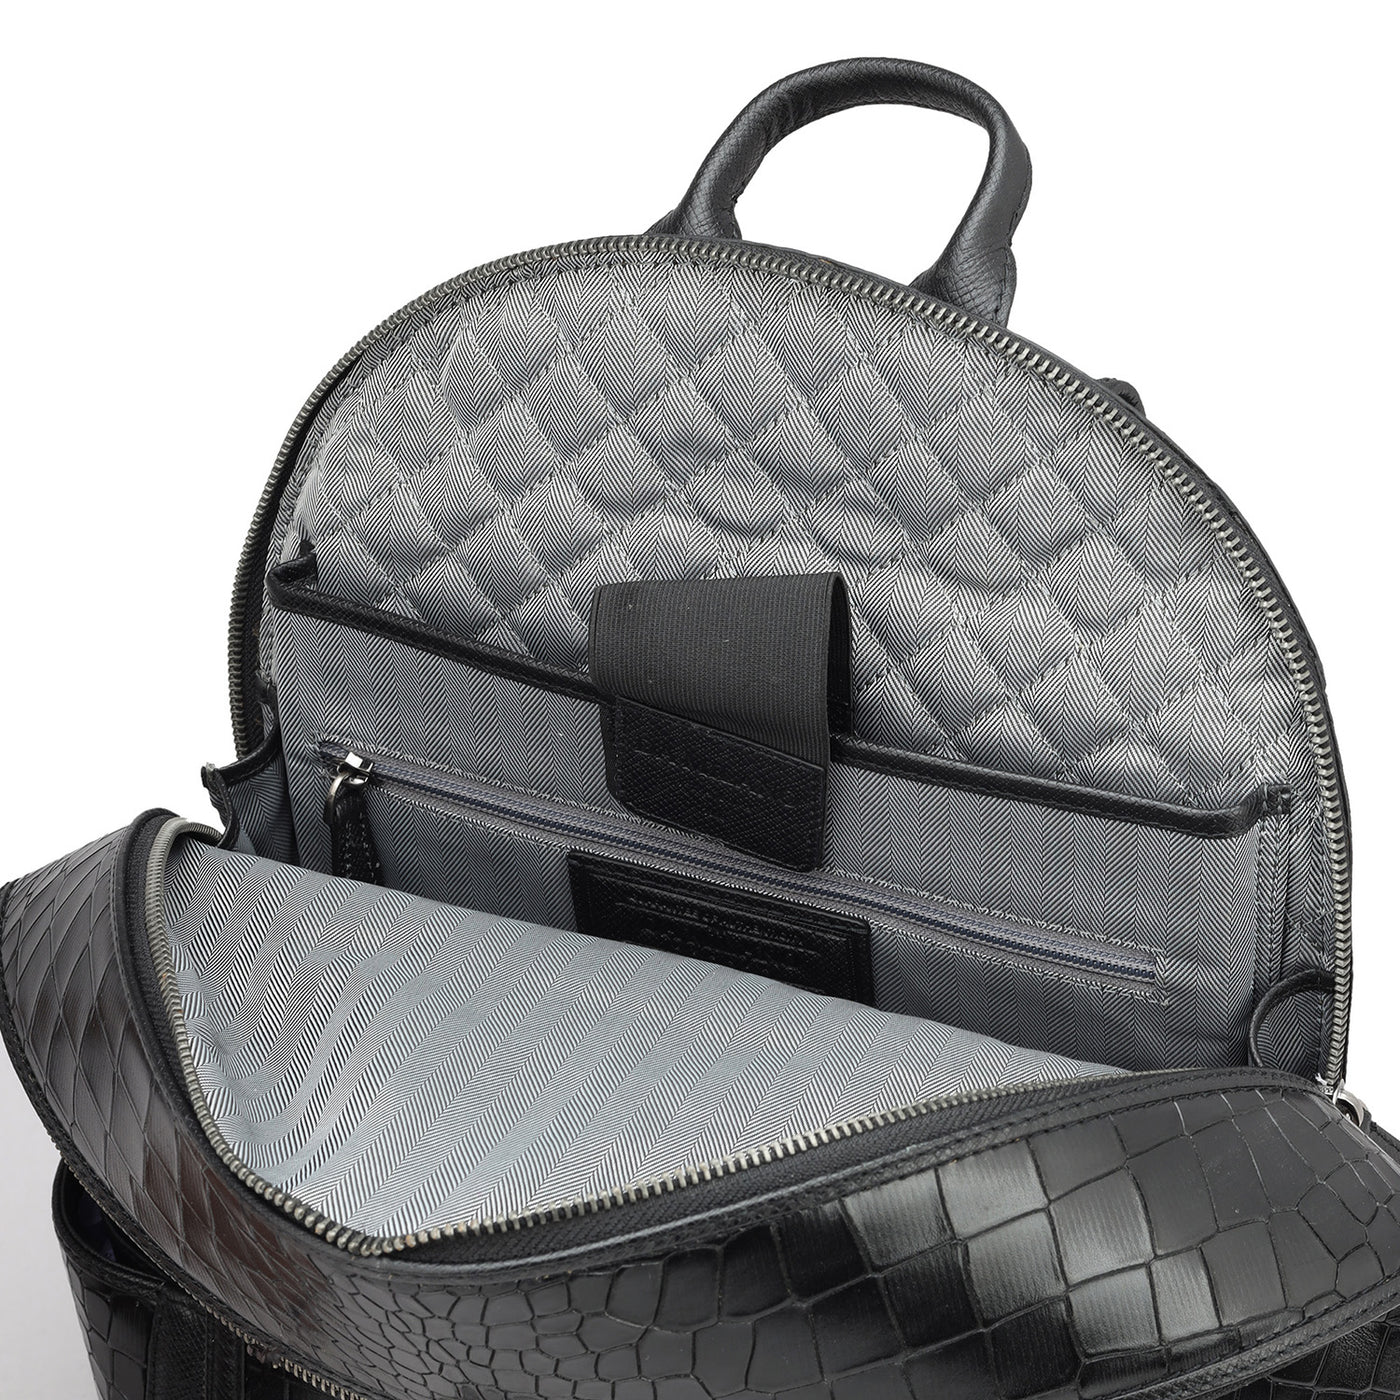 Croco Leather Backpack - Black